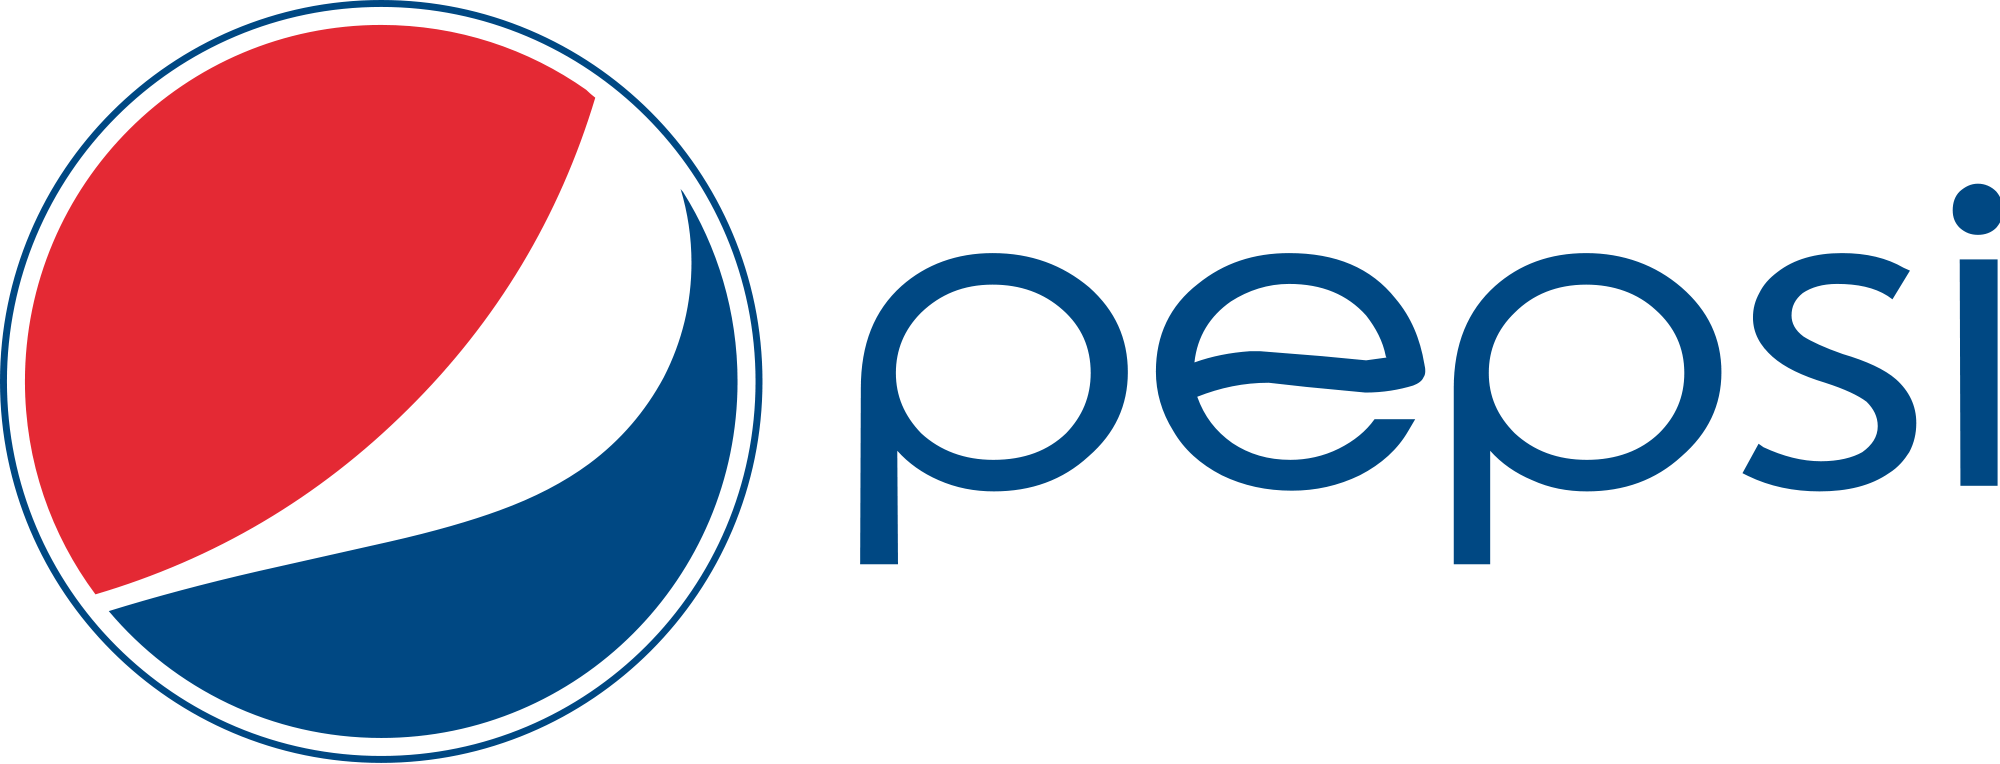 Pepsi logo.png